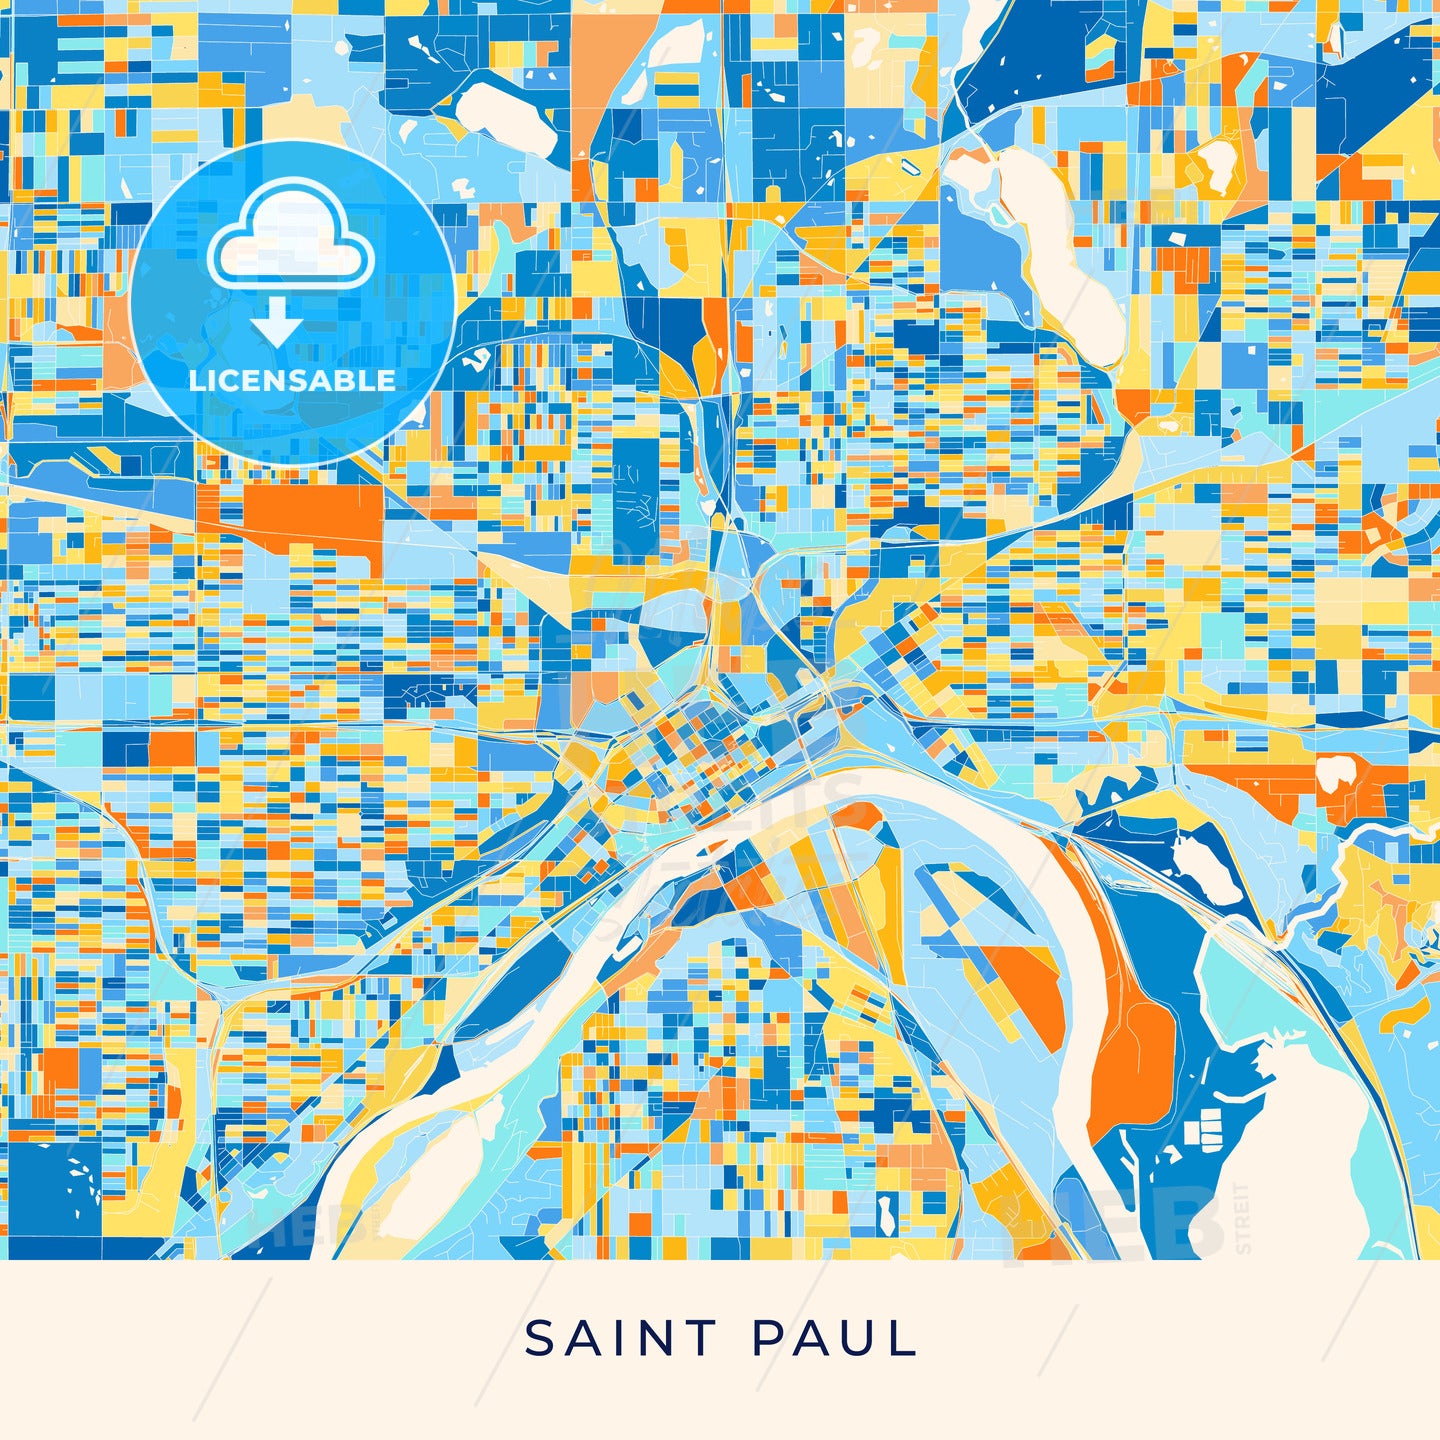 Saint Paul colorful map poster template